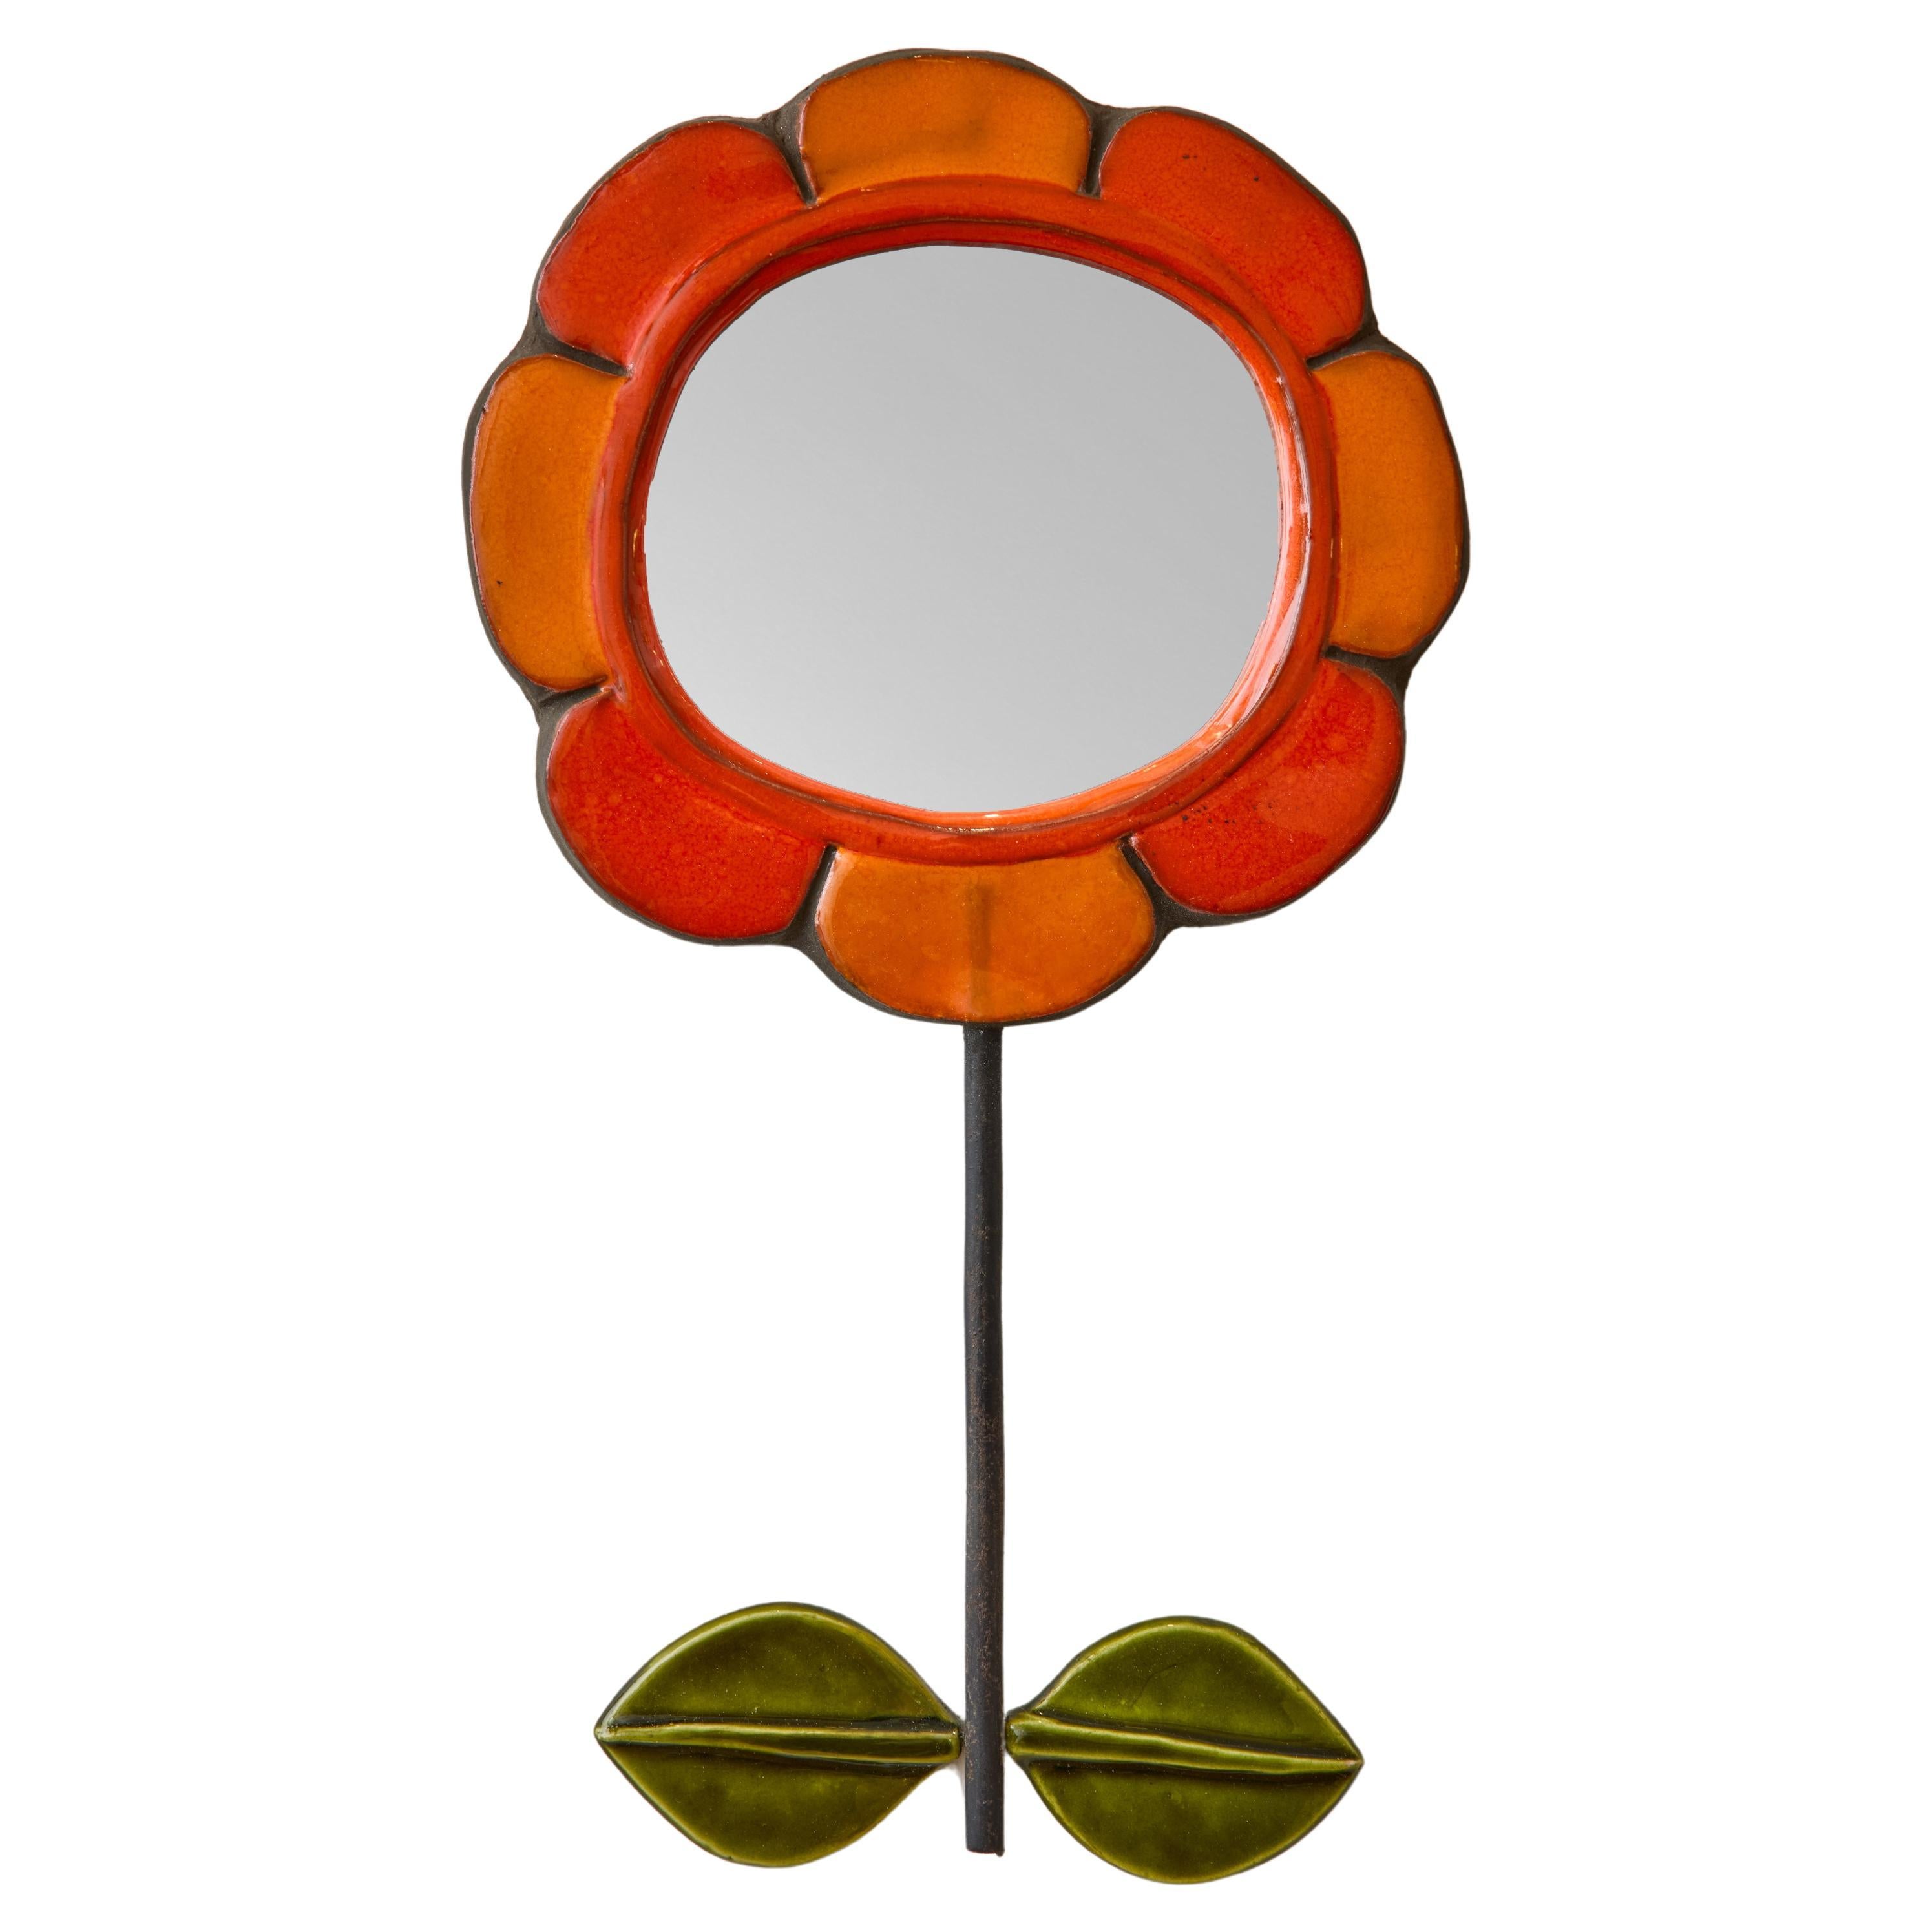 Mithe Espelt Flower Shaped Mirror With Orange Petals For Sale